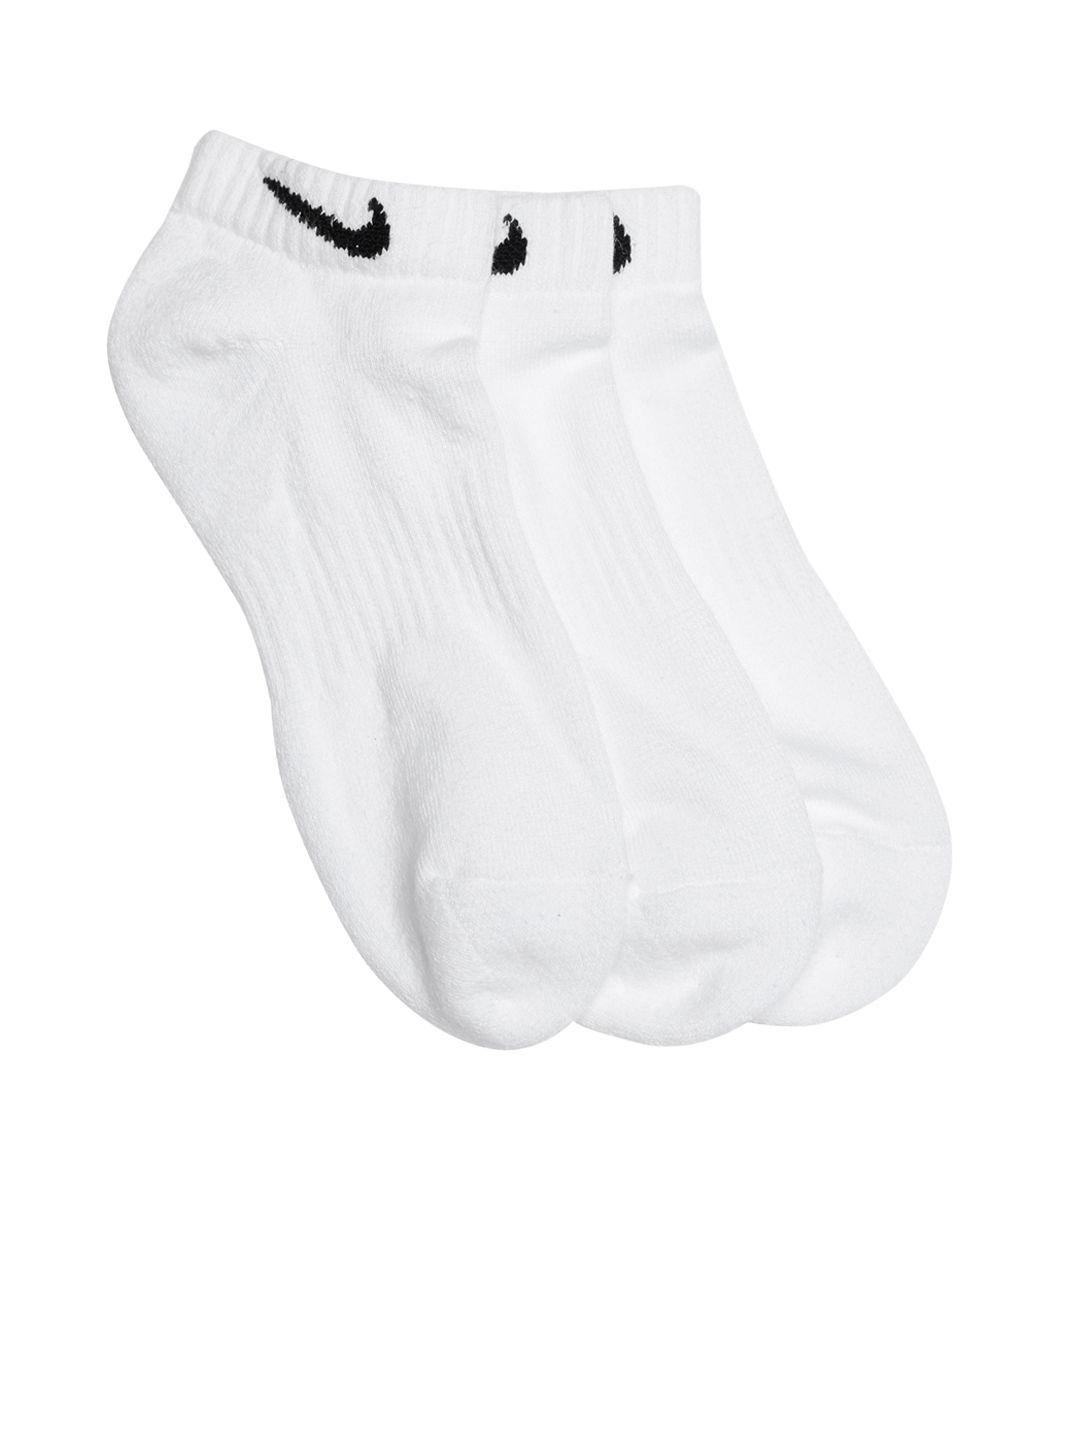 nike-unisex-pack-of-3-white-everyday-cush-low-training-ankle-length-socks